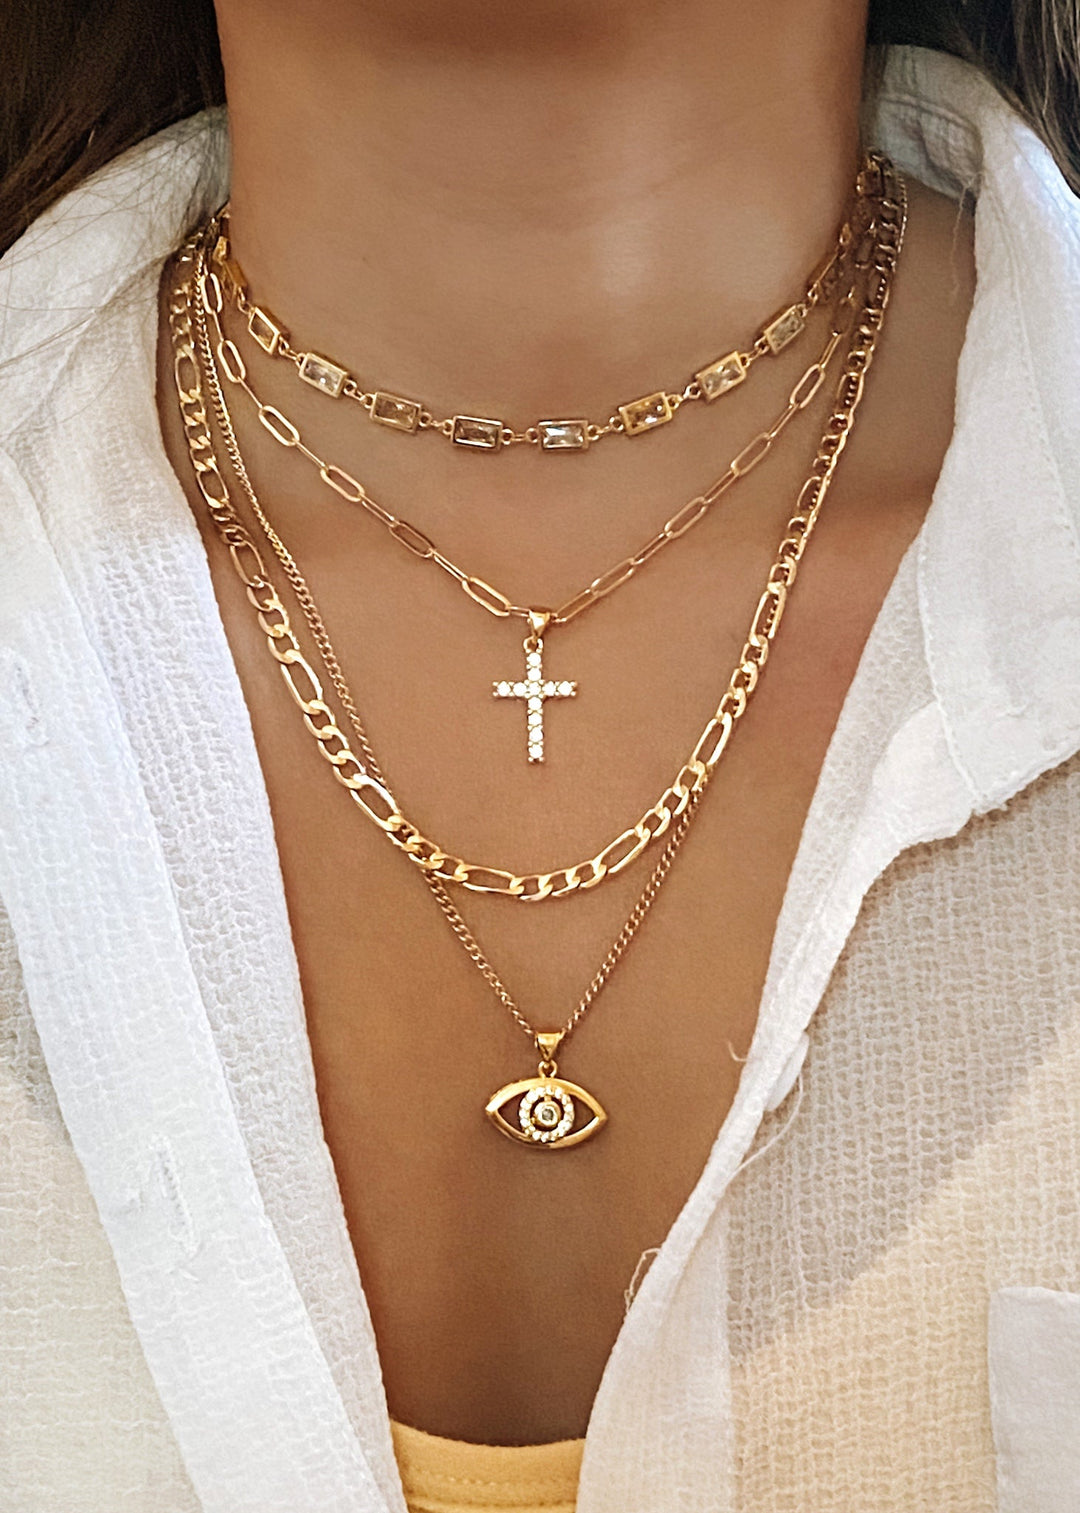 Cradled in Protection Evil Eye Necklace - Gold Filled